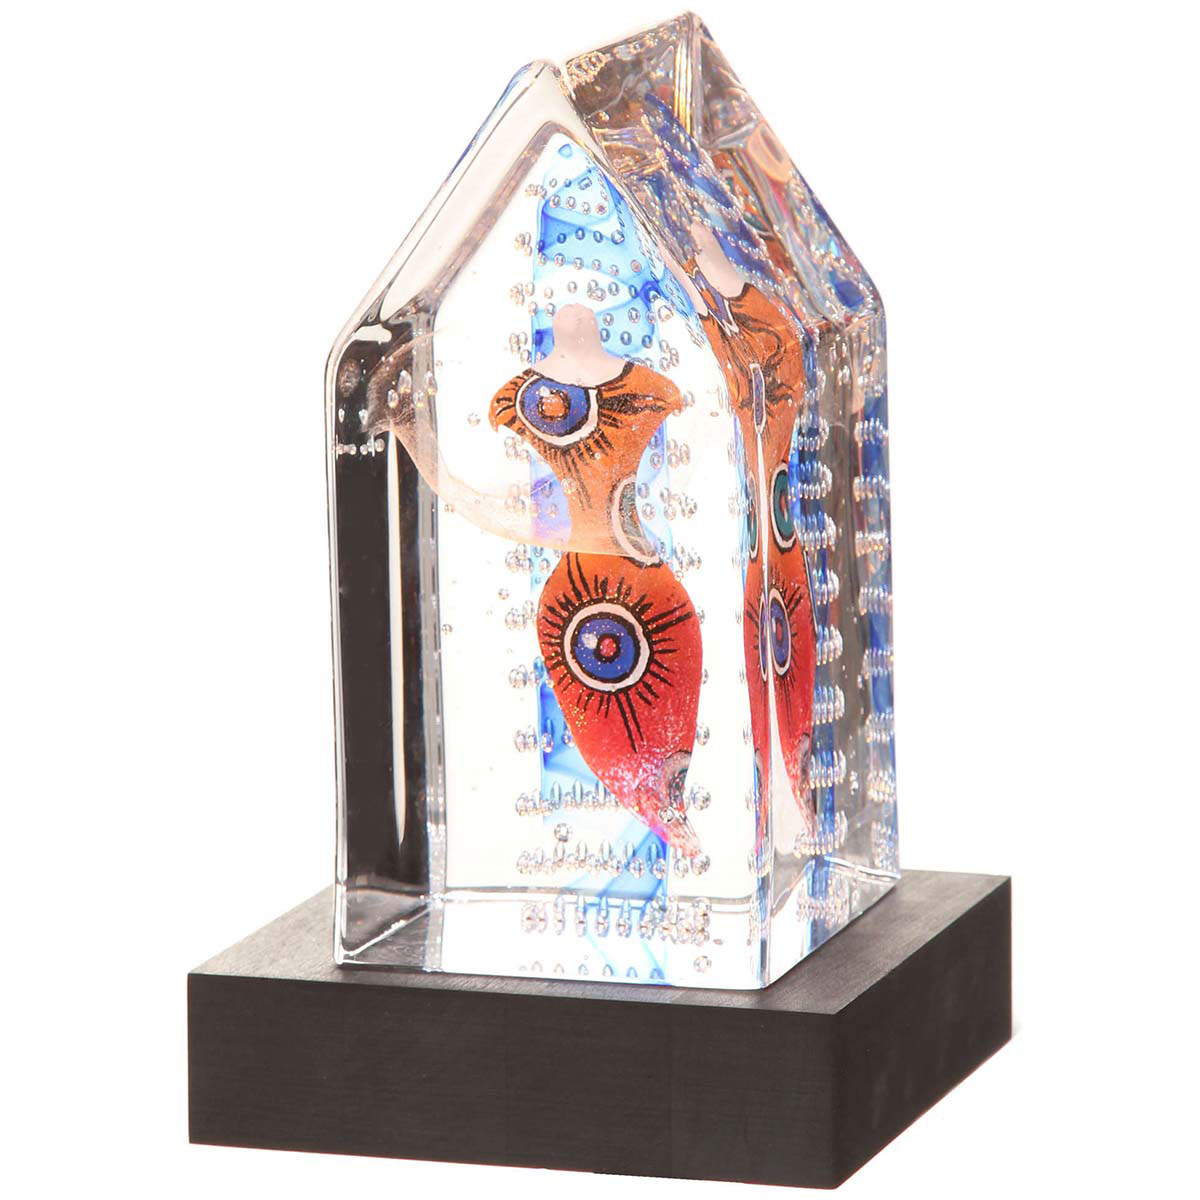 Kosta Boda Art Glass, Kjell Engman Welcome Home, Limited Edition of 60